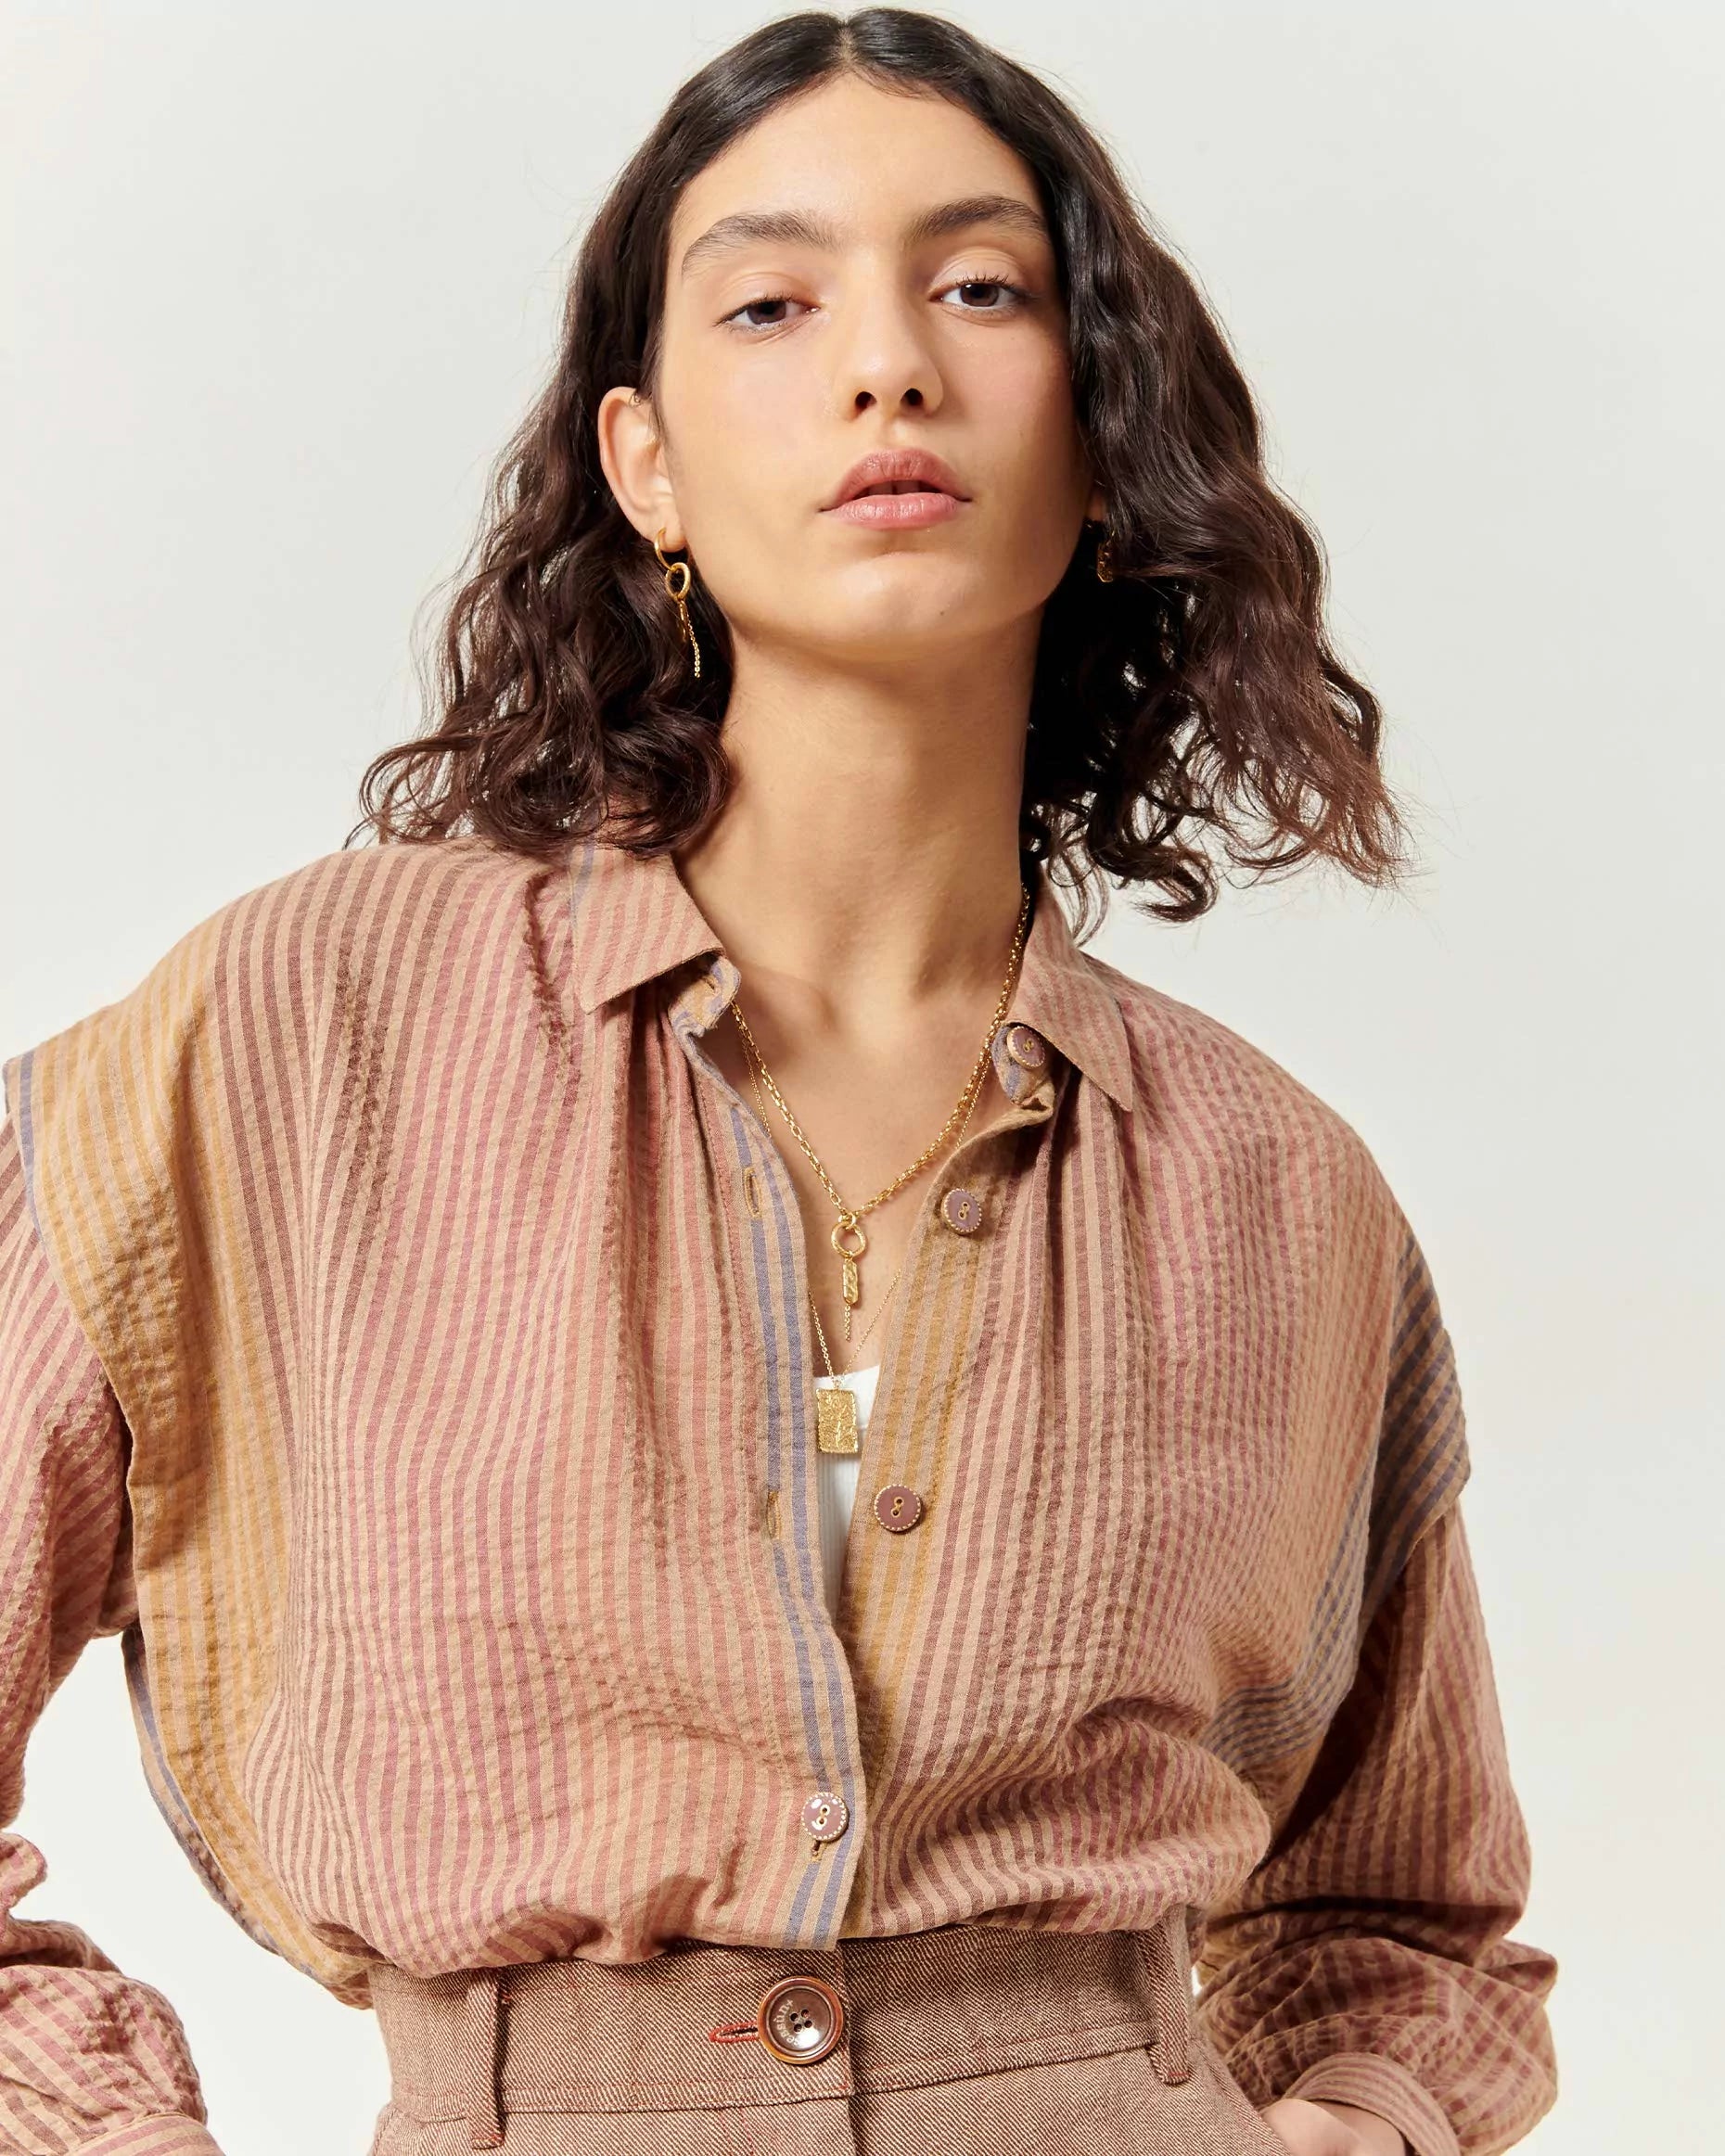 Sessùn  PINTALINA blouse / women